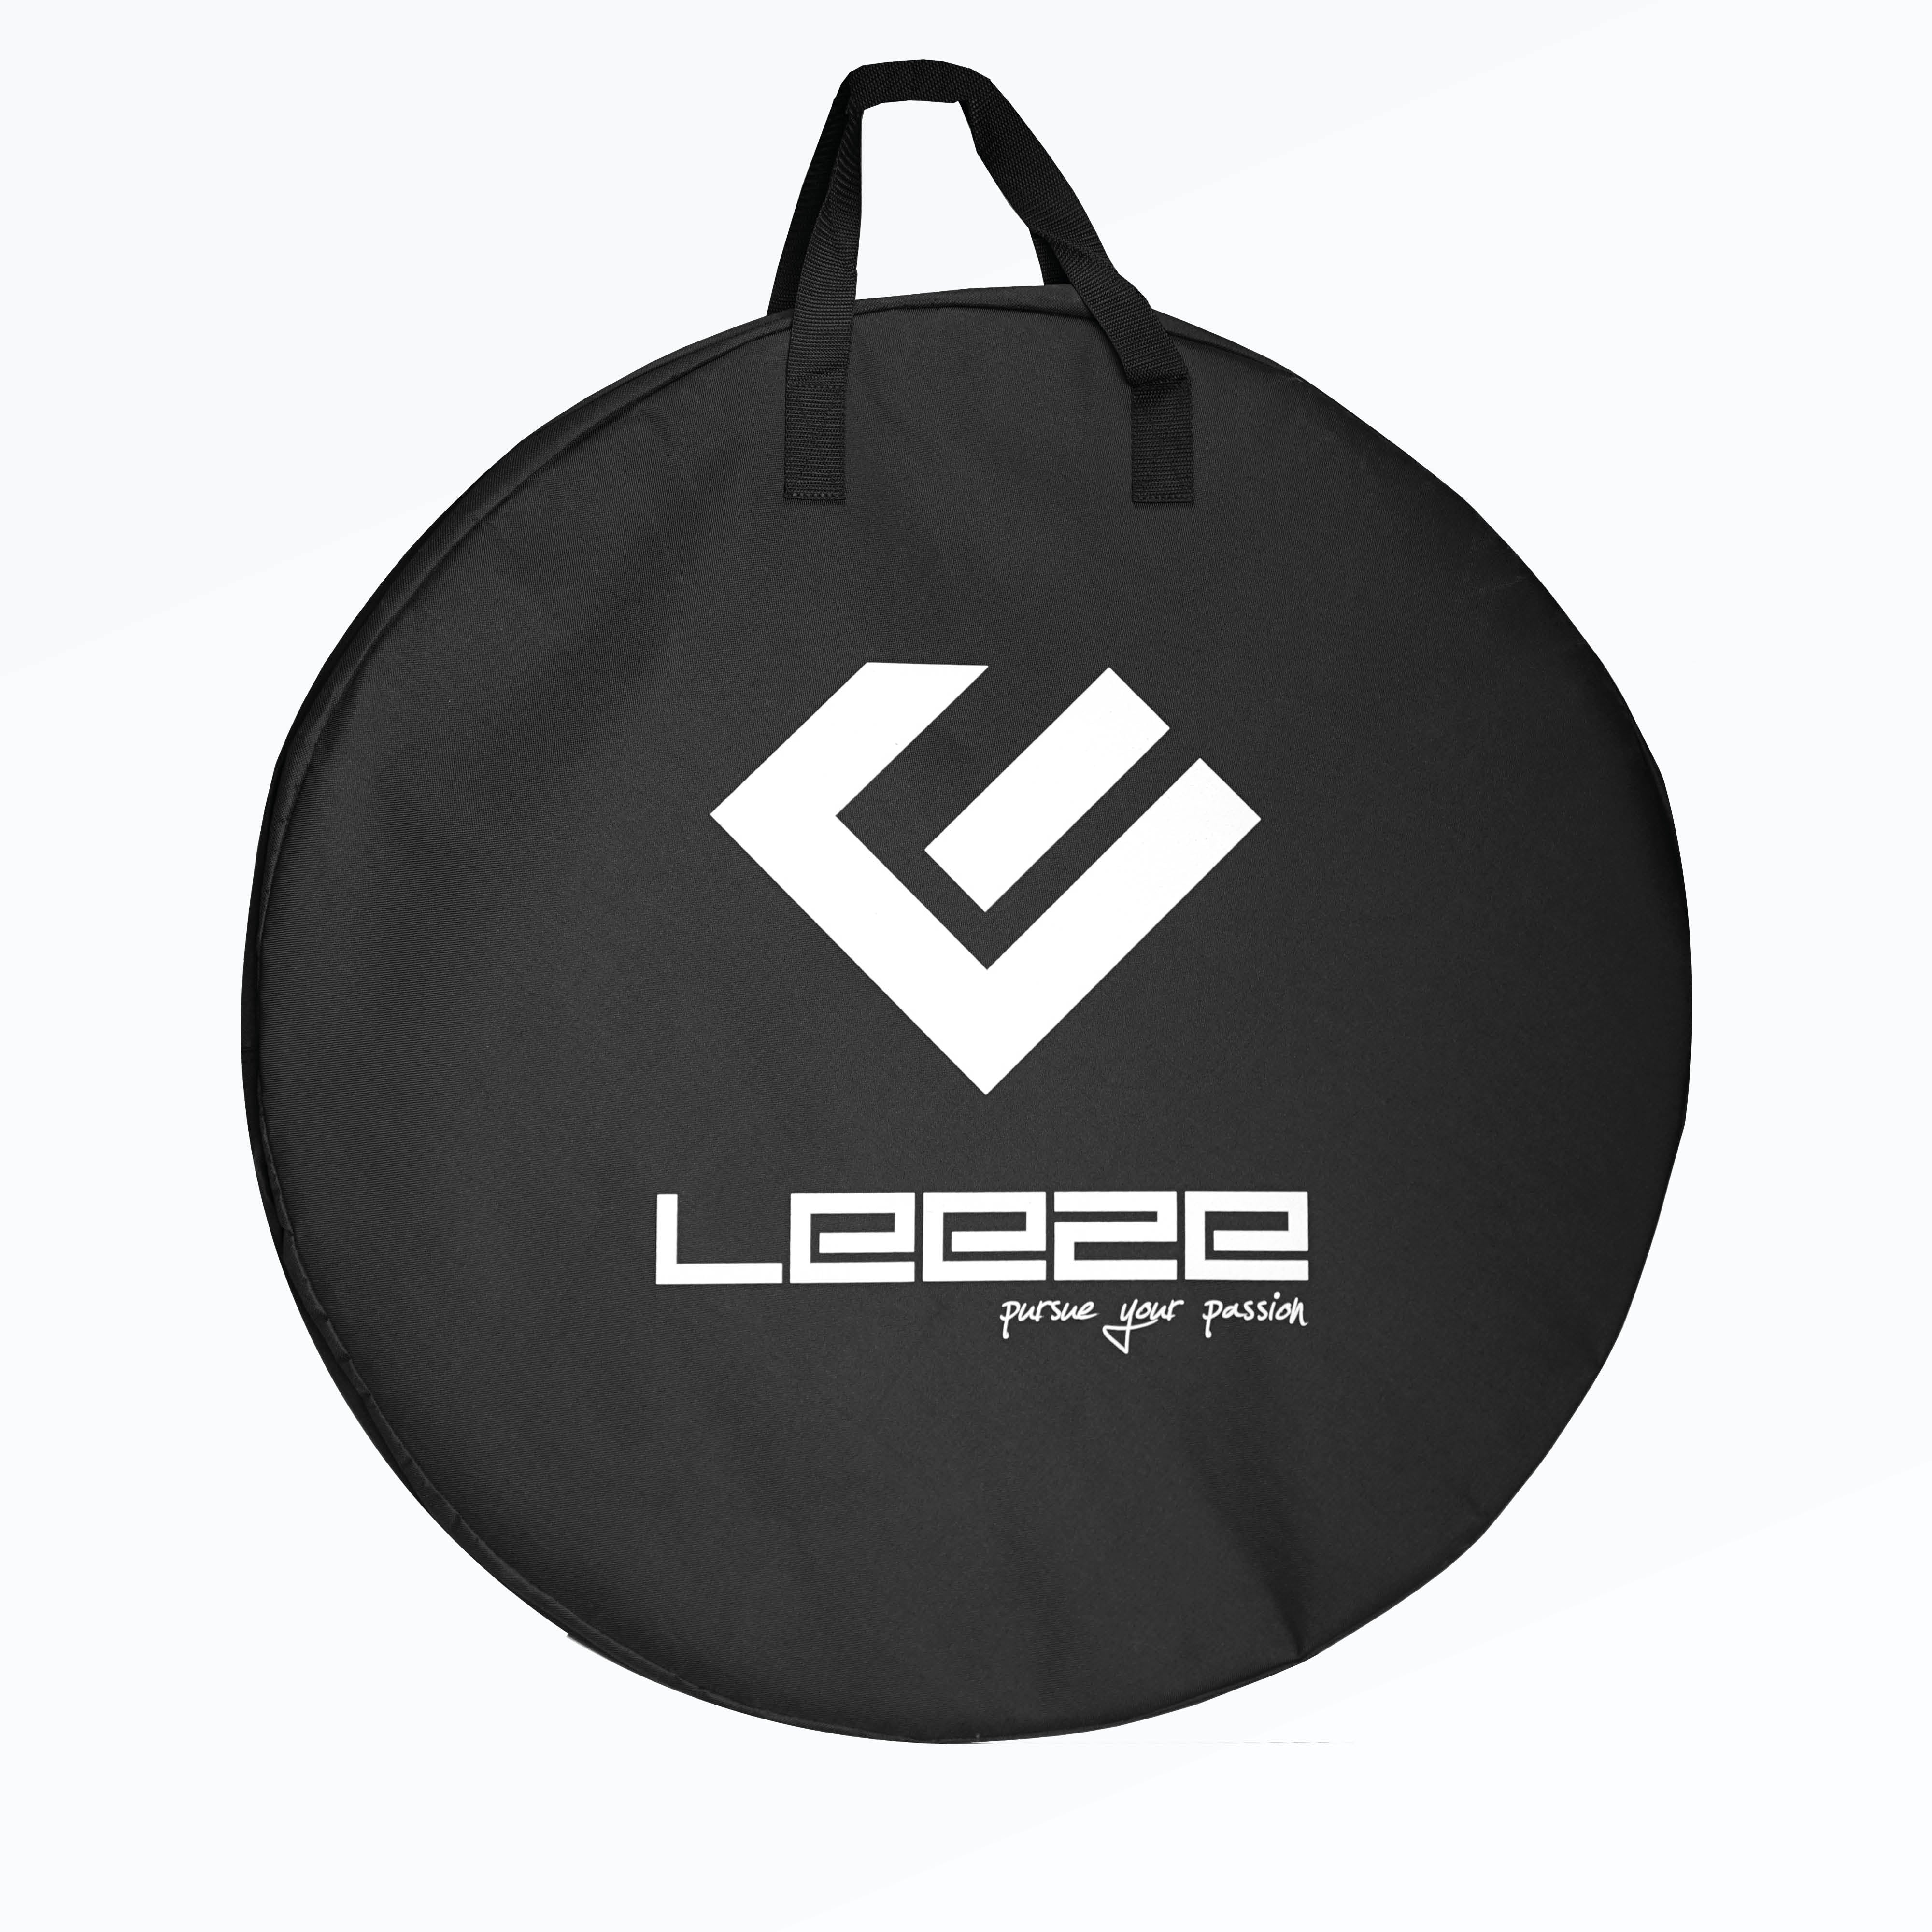 LEEZE Wheel Bag for 2 wheels